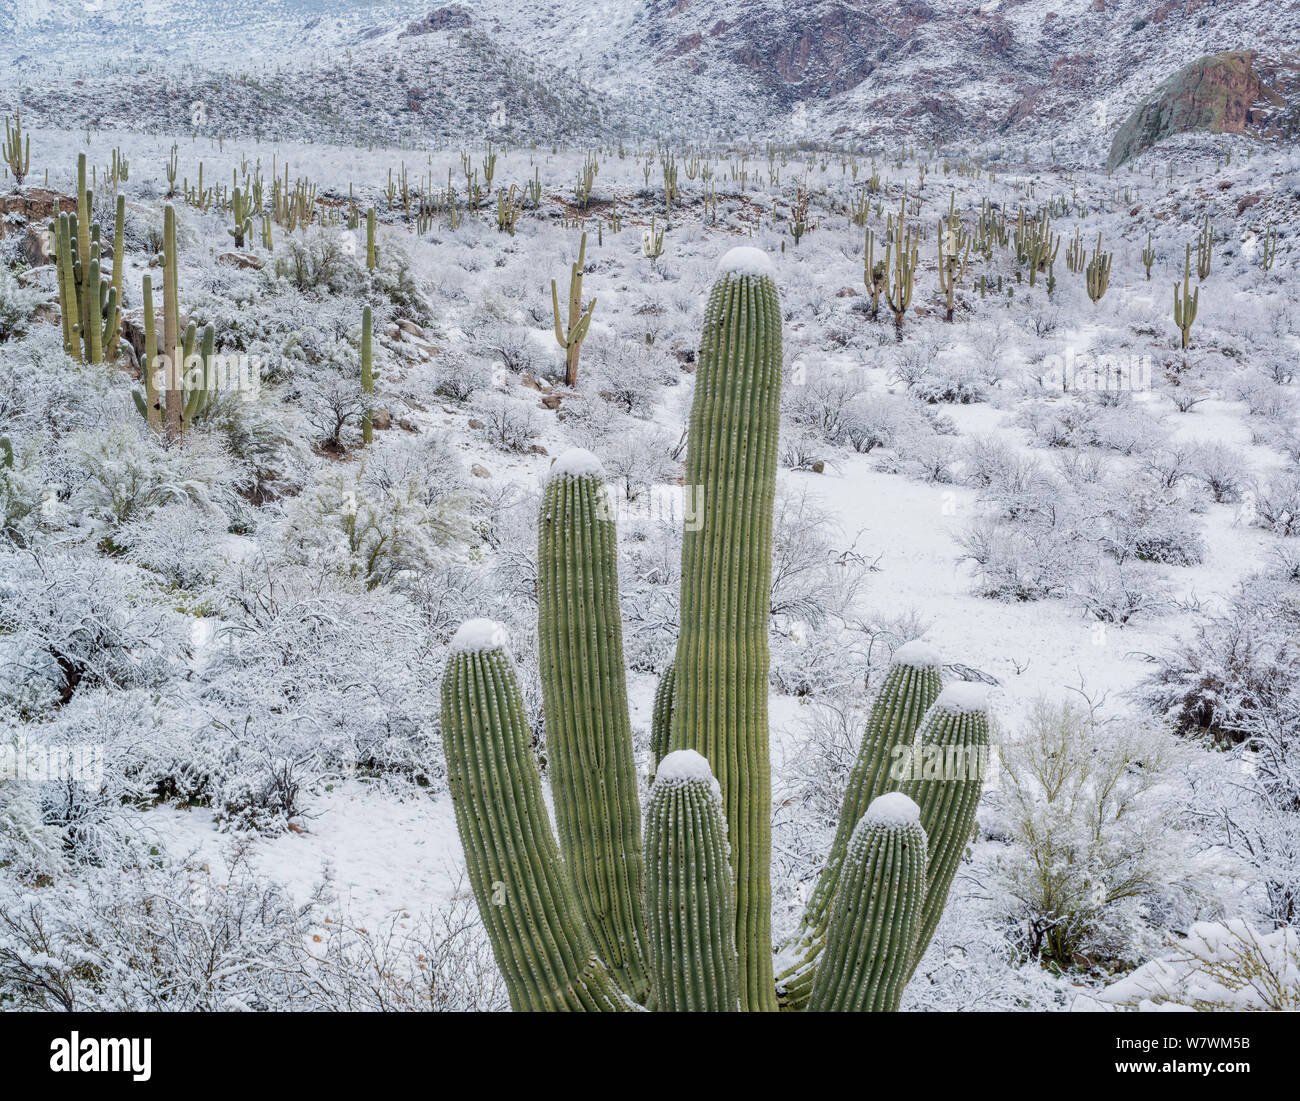 Saguaro cacti (Carnegiea gigantea) covered with snow, with the Catalina State Park, Santa Catalina Mountains, Arizona, USA, February. Stock Photo